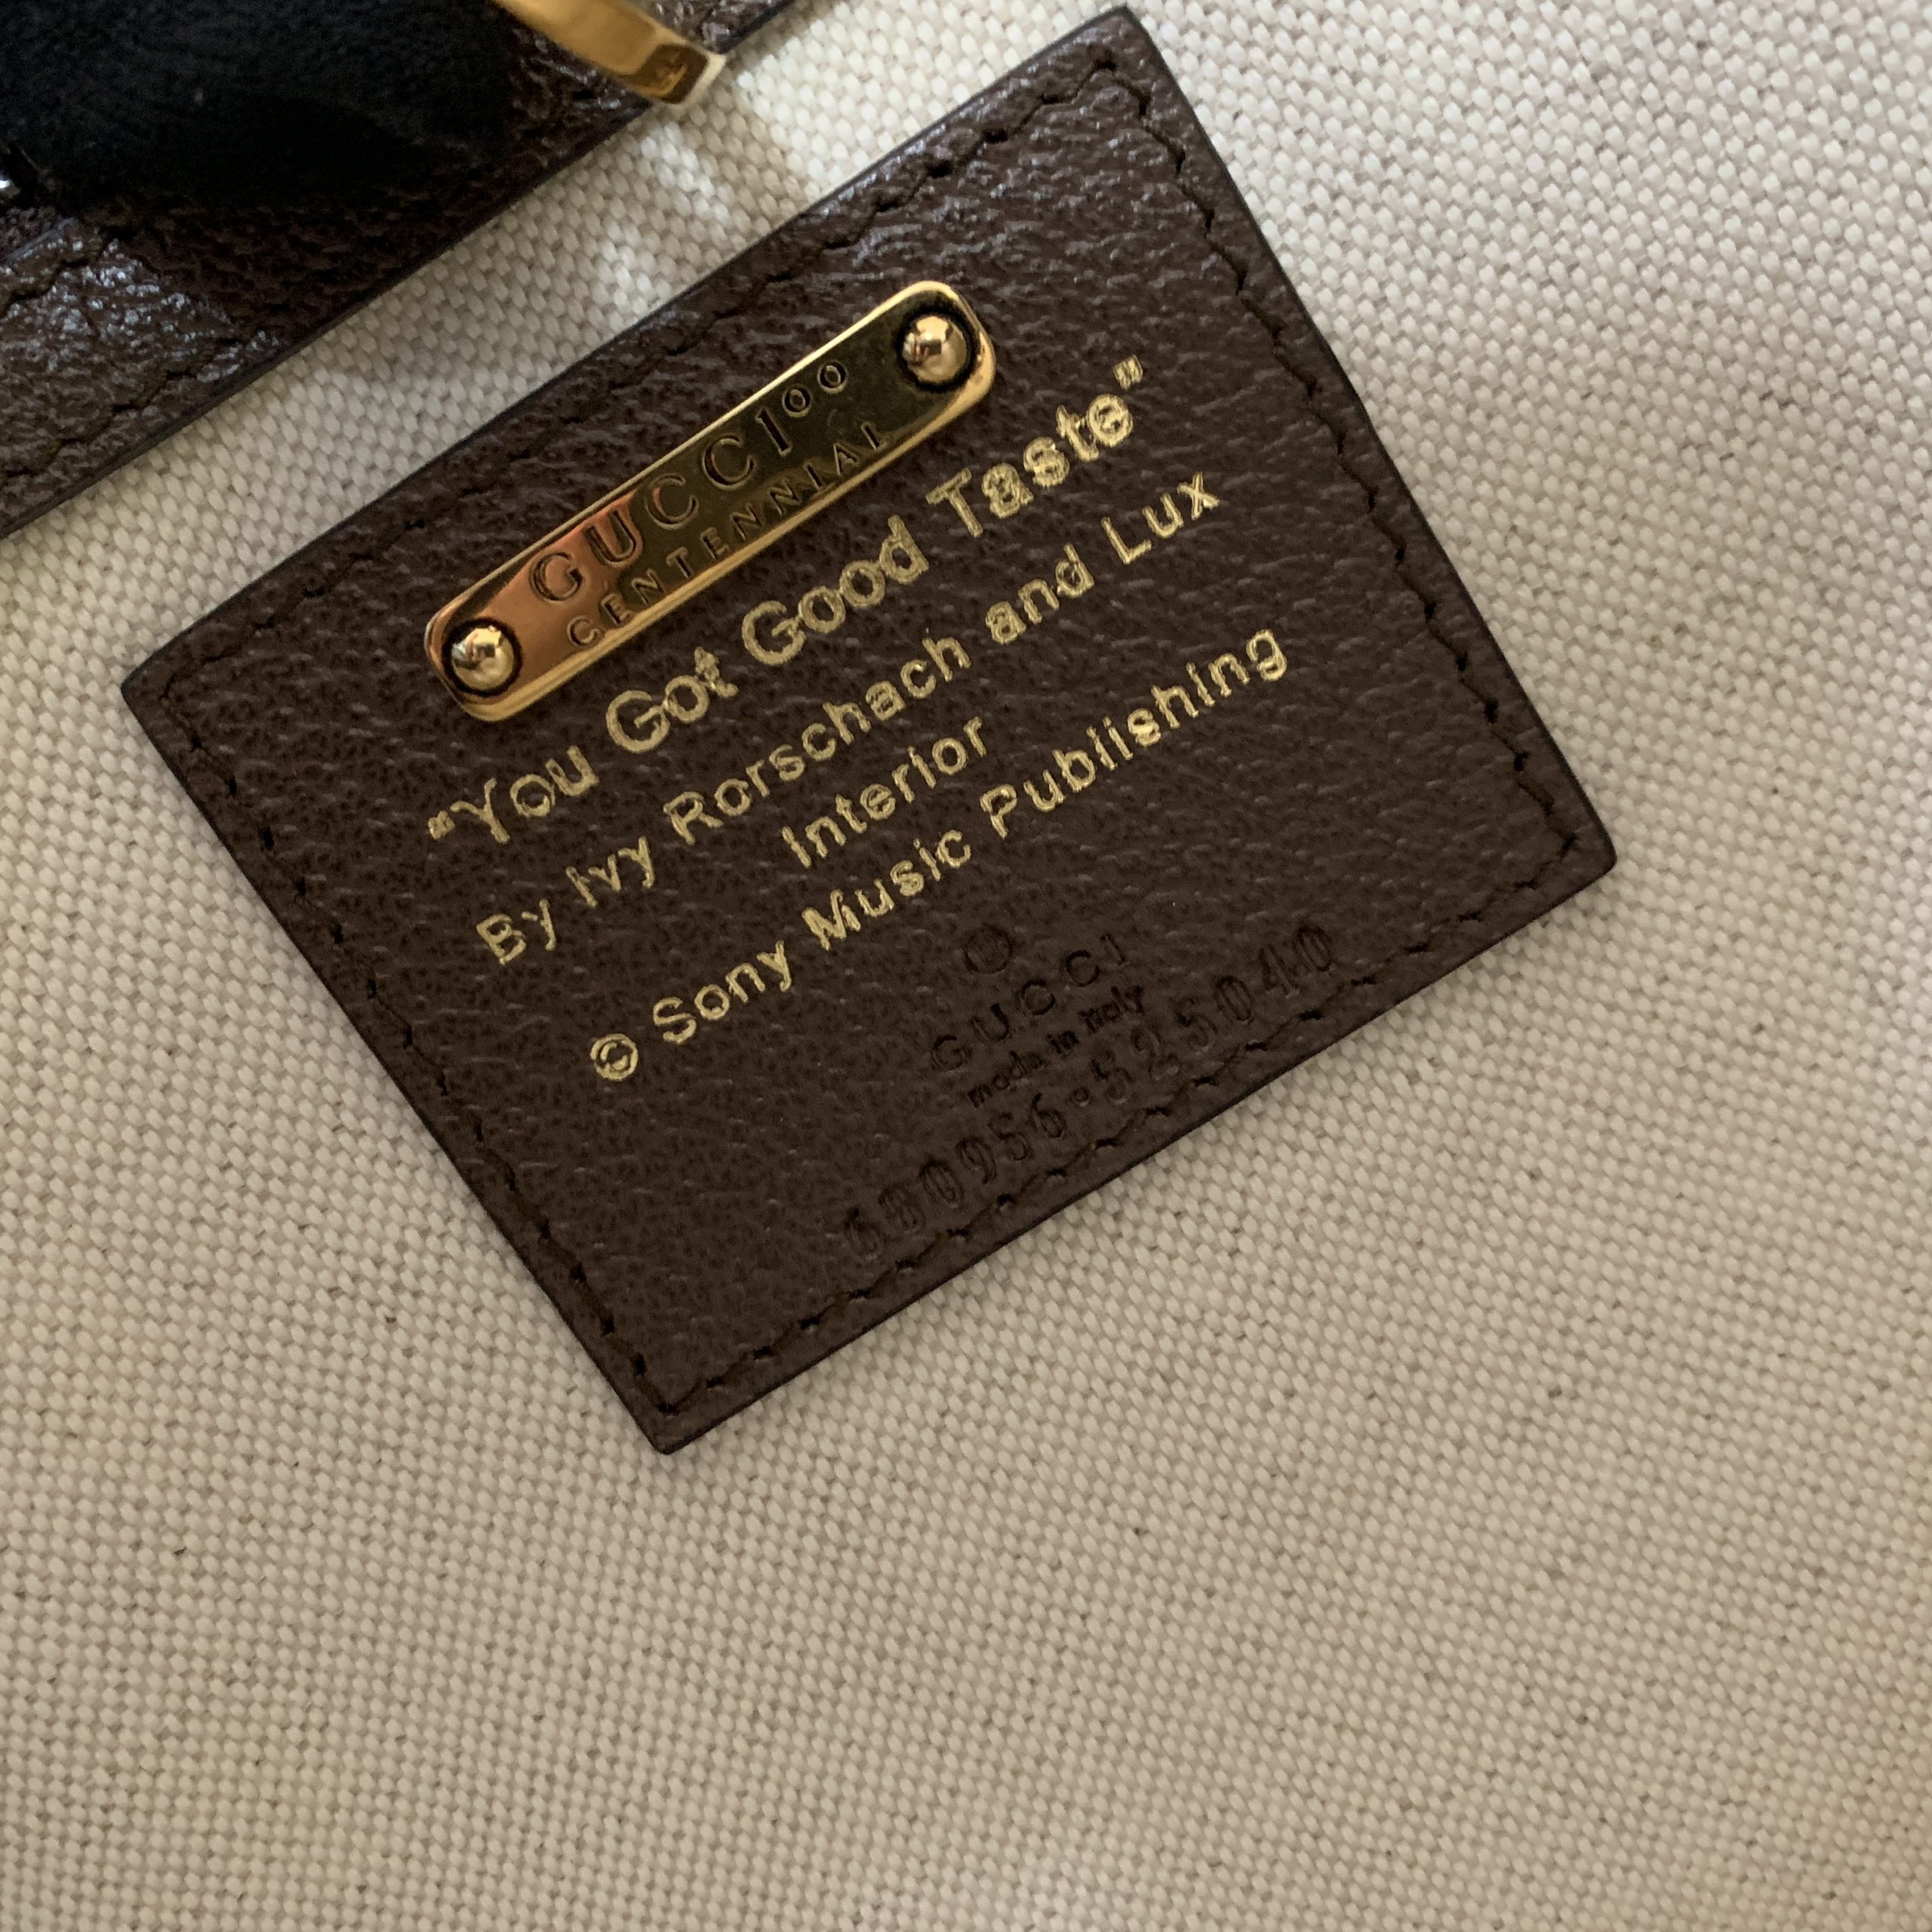 Gucci 100 Centennial Music Small Tote Bag